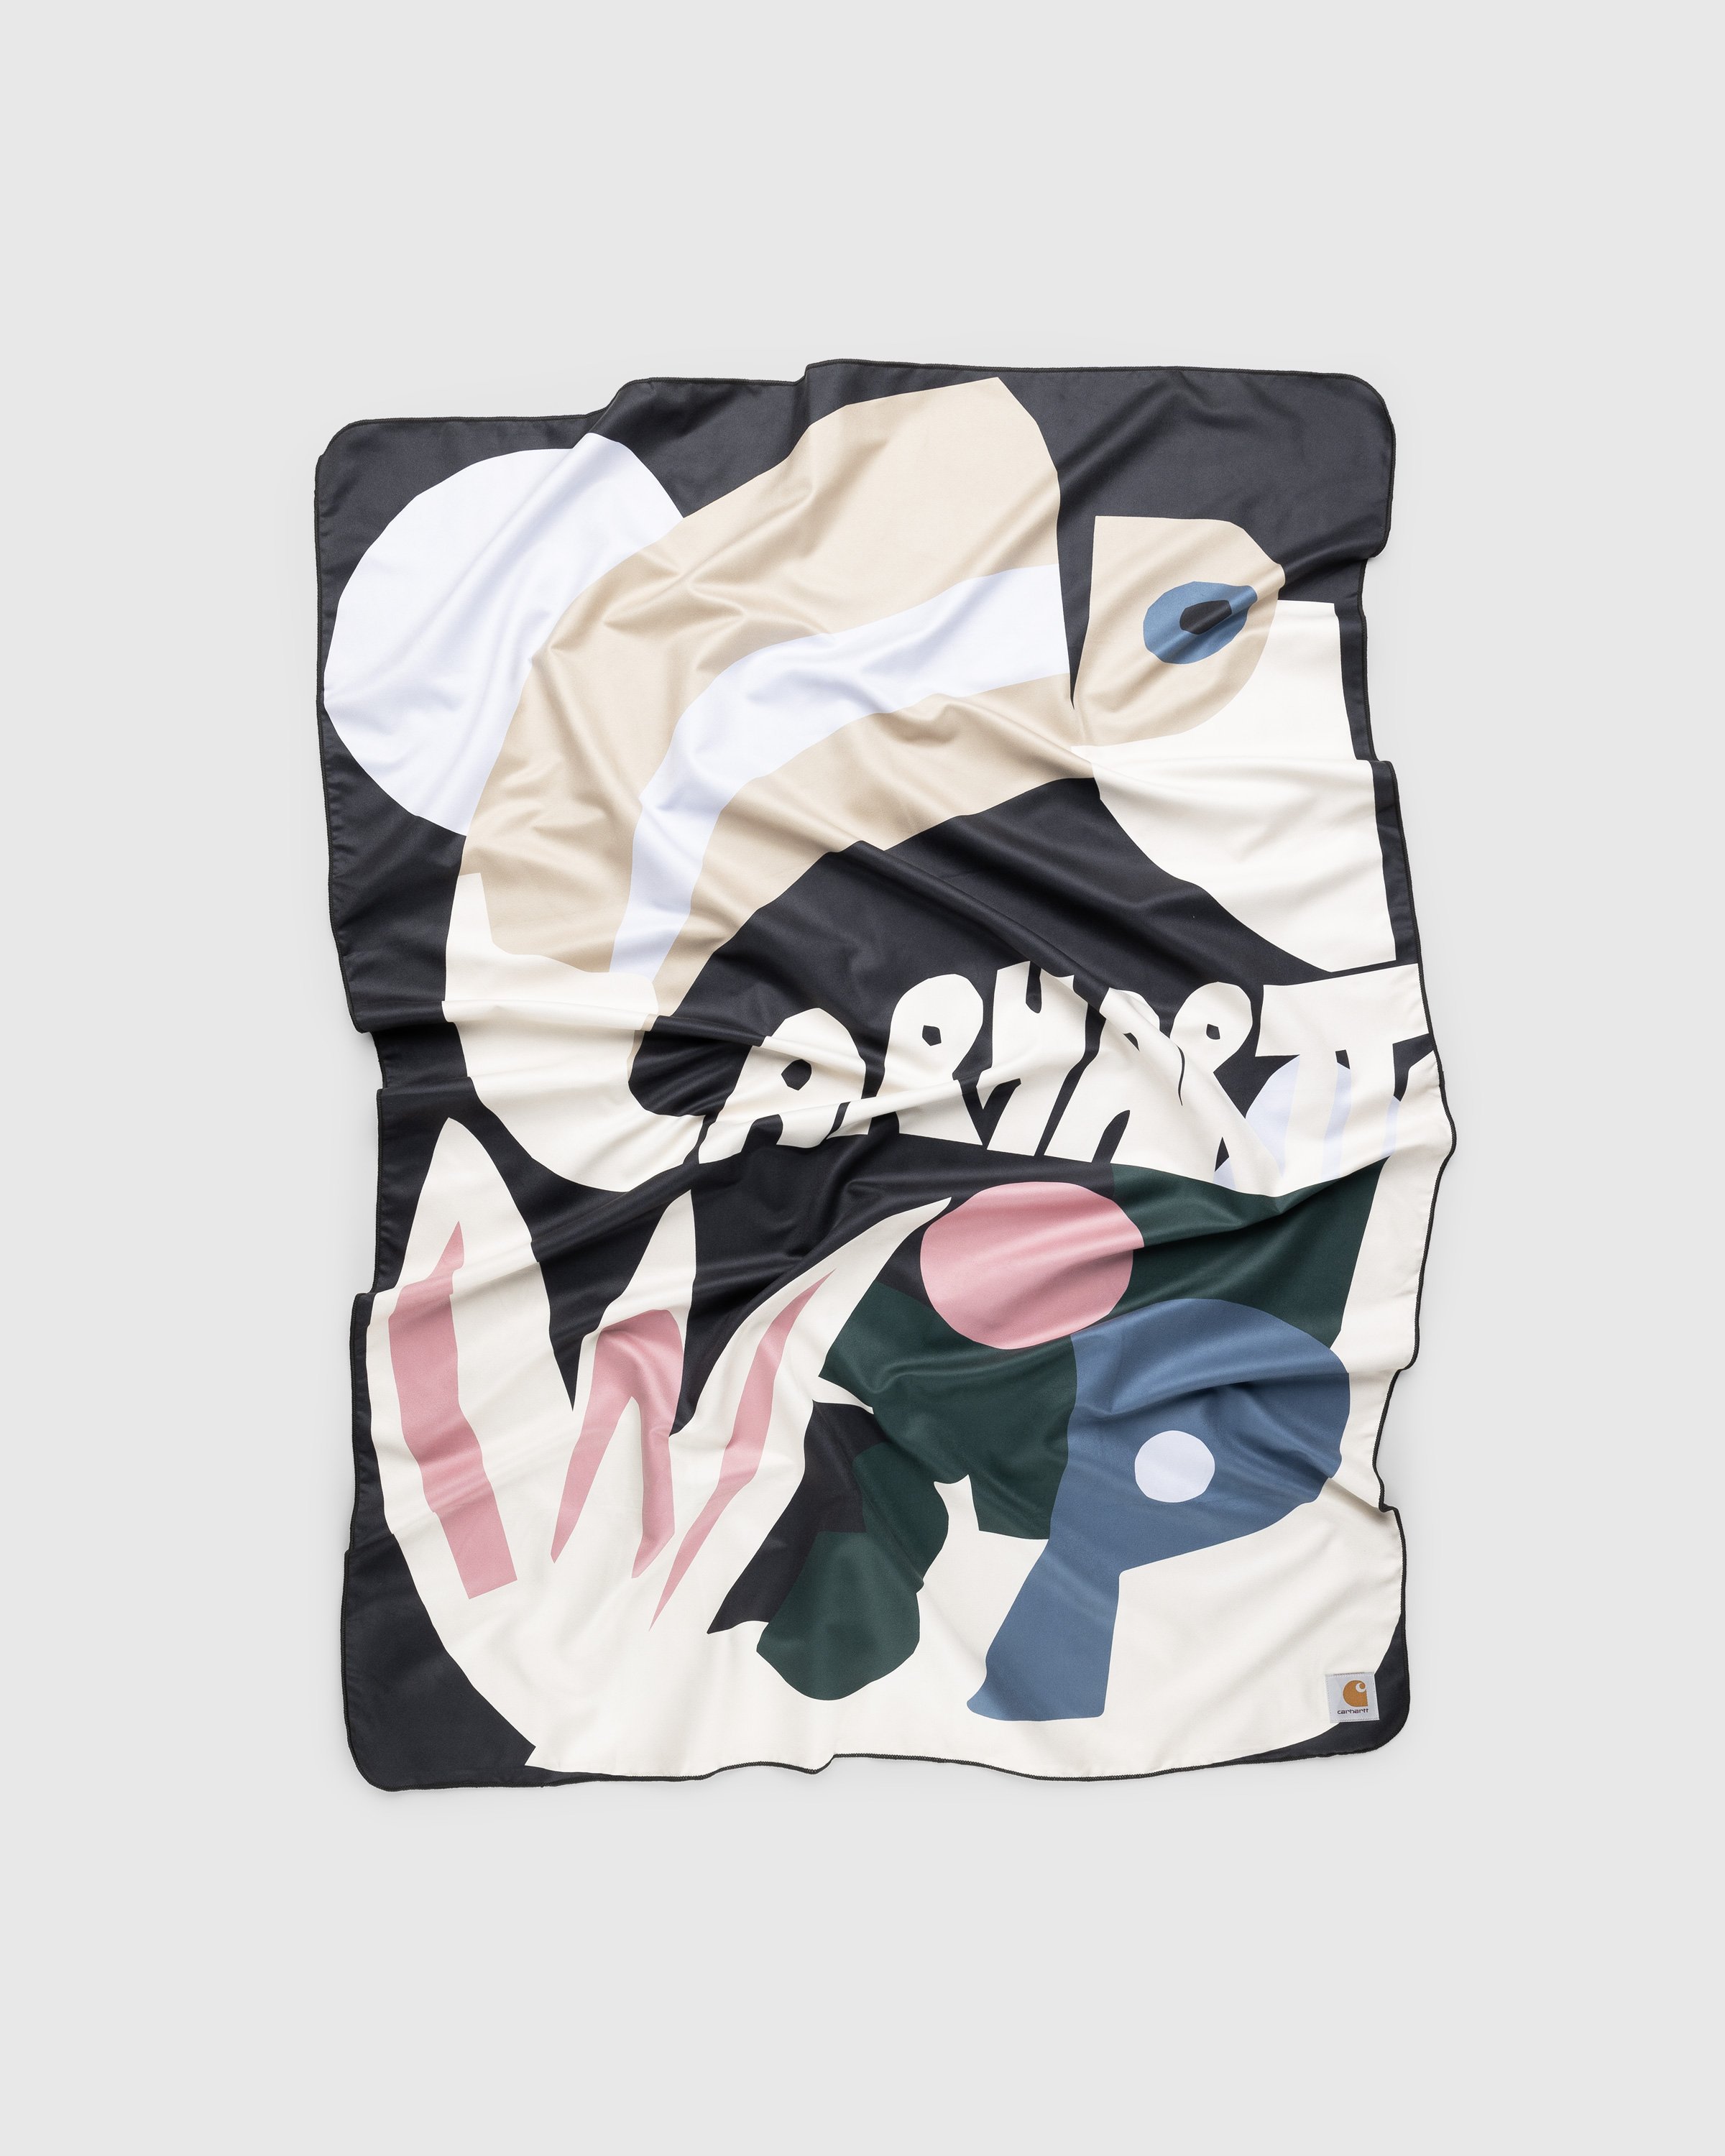 Carhartt WIP - Tamas Packable Towel Multi - Lifestyle - Multi - Image 1